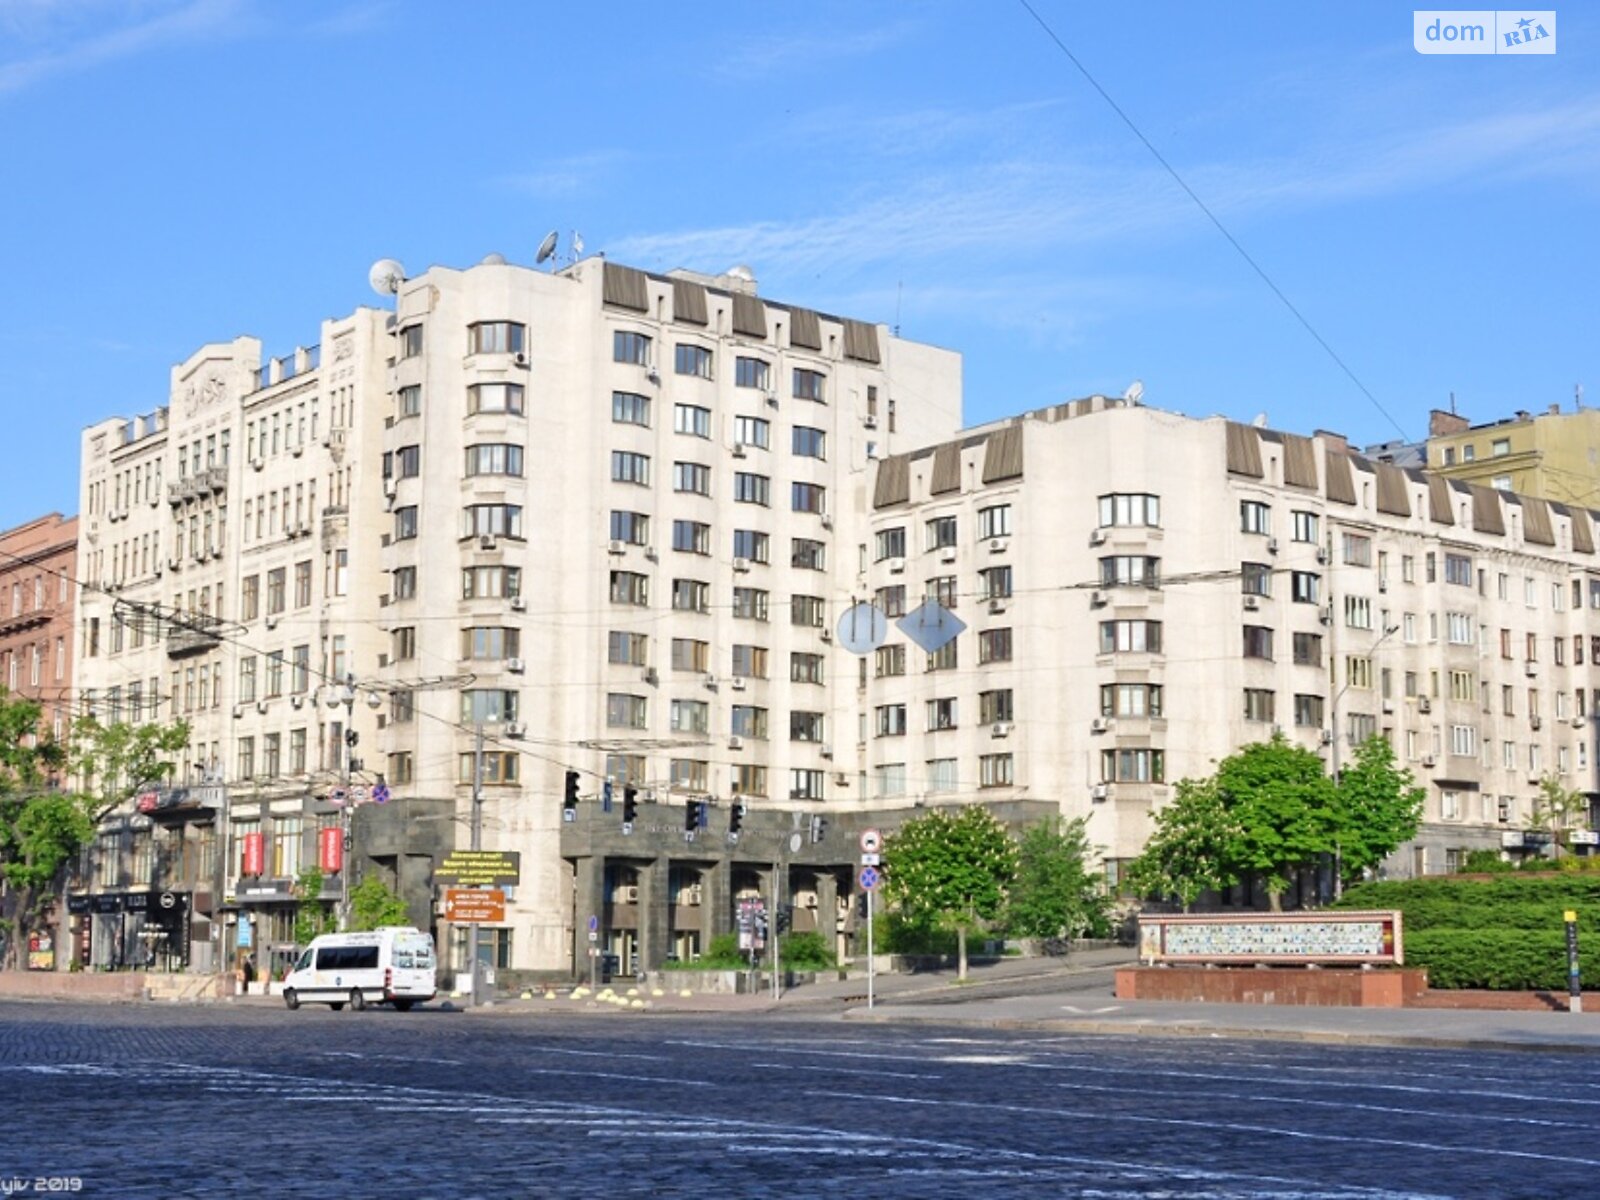 Продажа четырехкомнатной квартиры в Киеве, на ул. Крещатик 4, район Липки фото 1